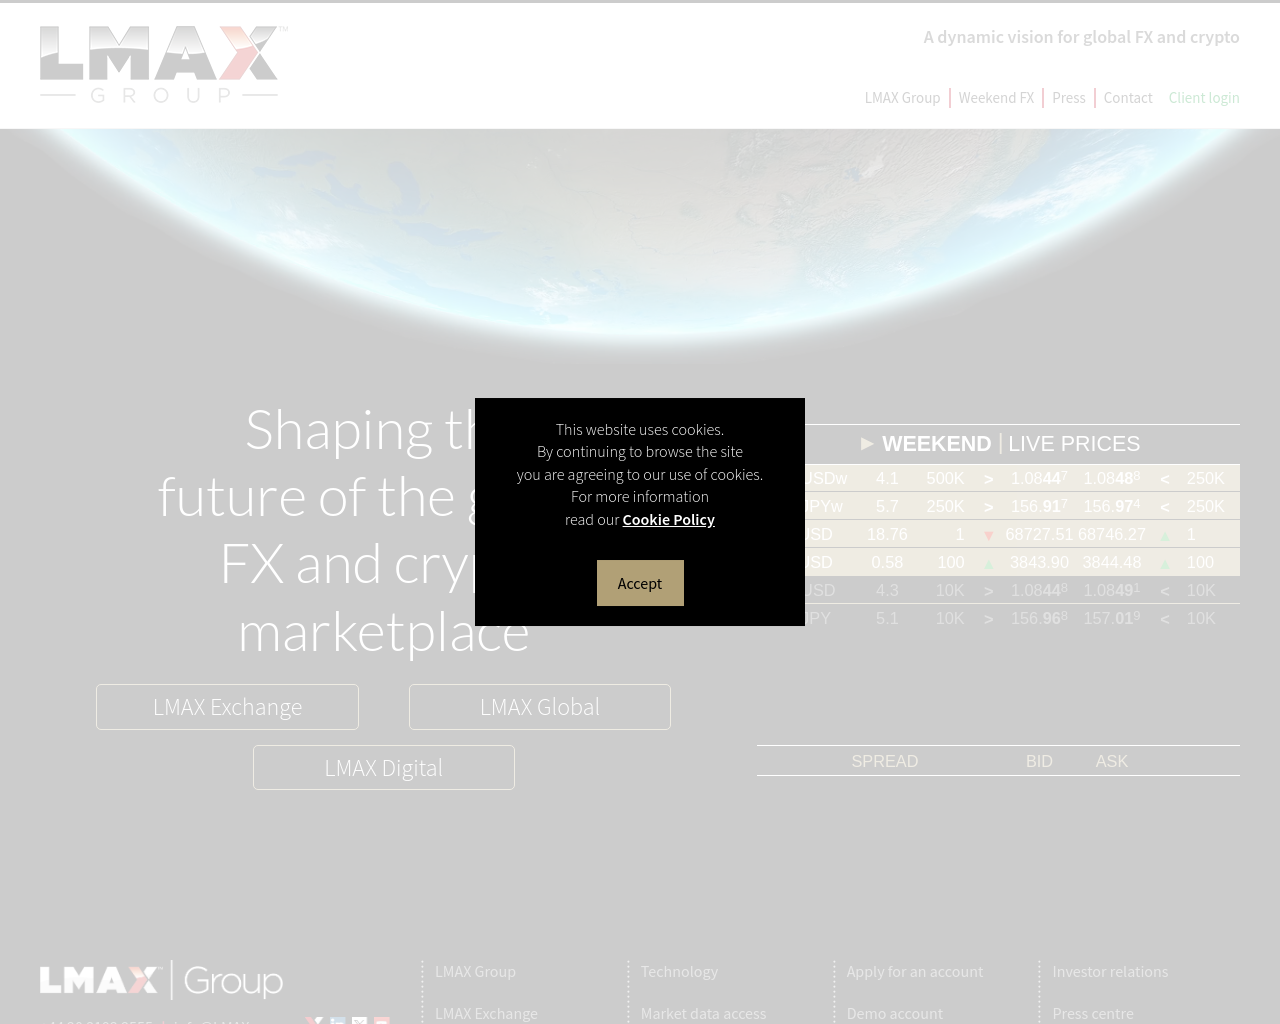 lmax.com